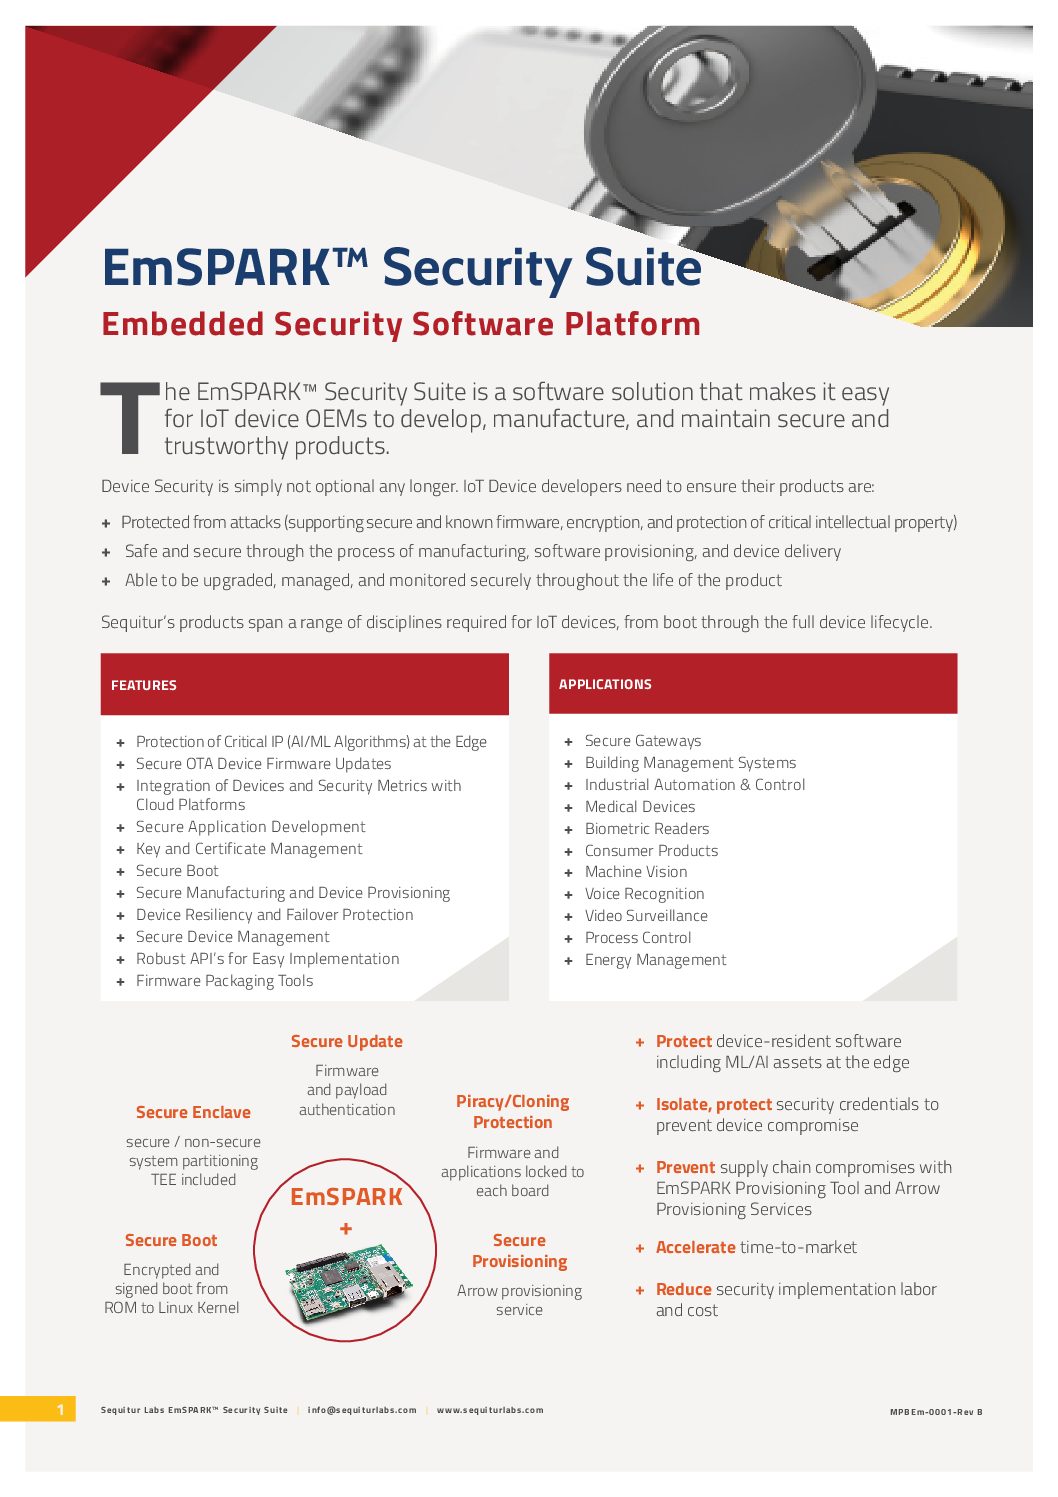 EmSPARK™ Security Suite Brochure